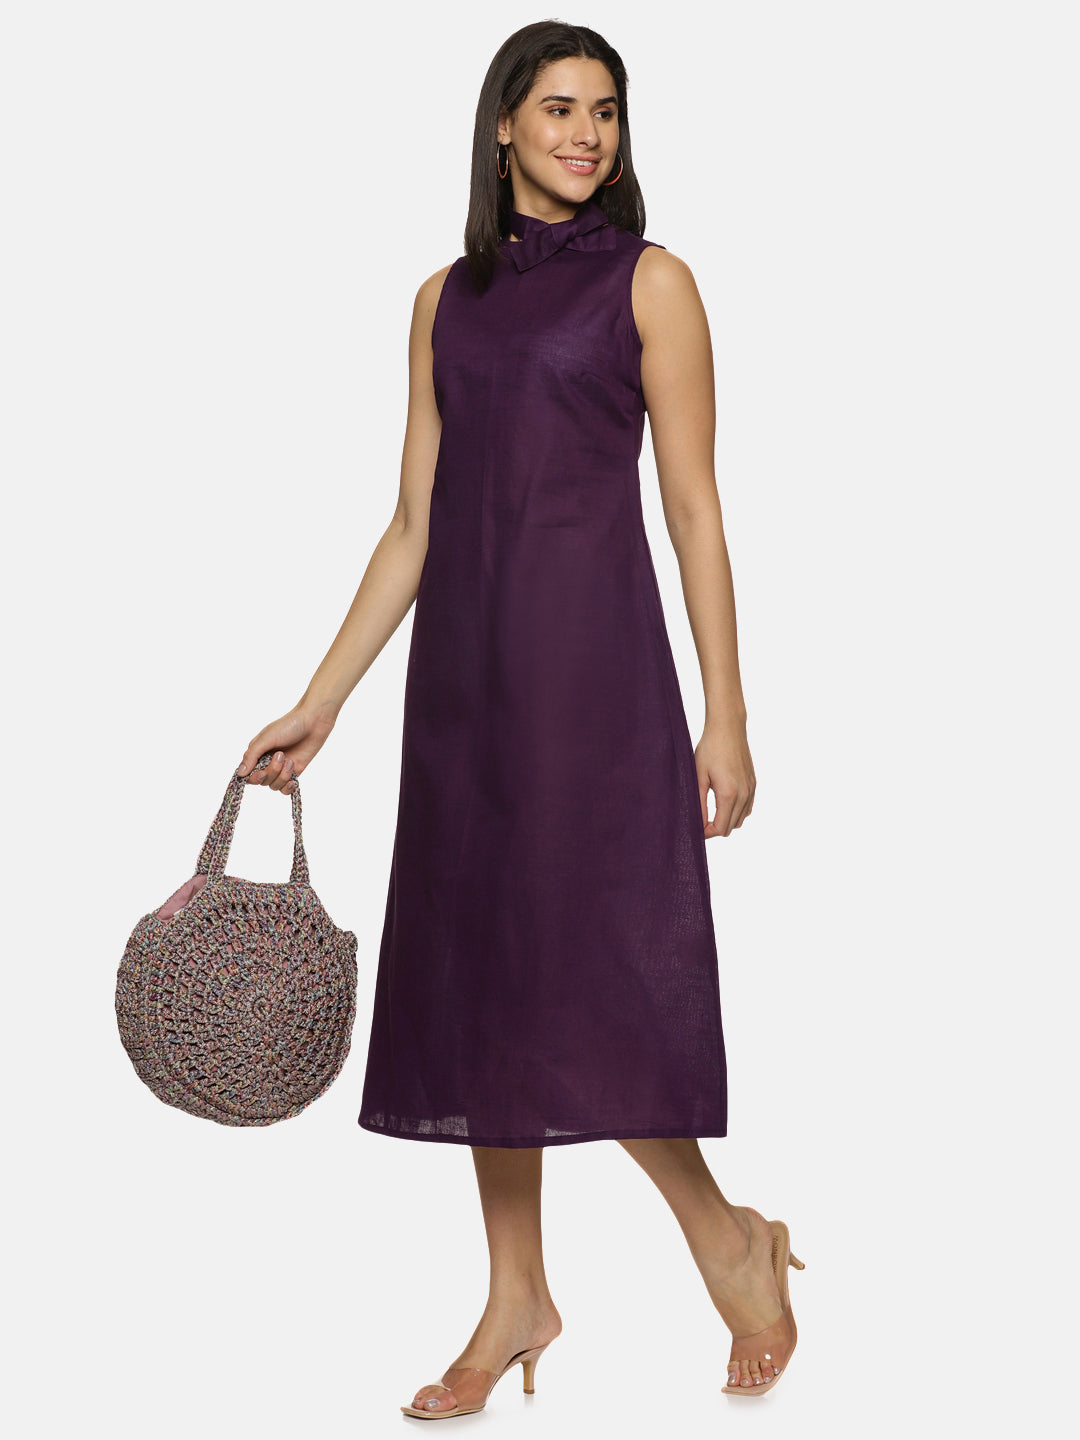 Linen Cotton Simple Sleeveless Straight cut purple Dress